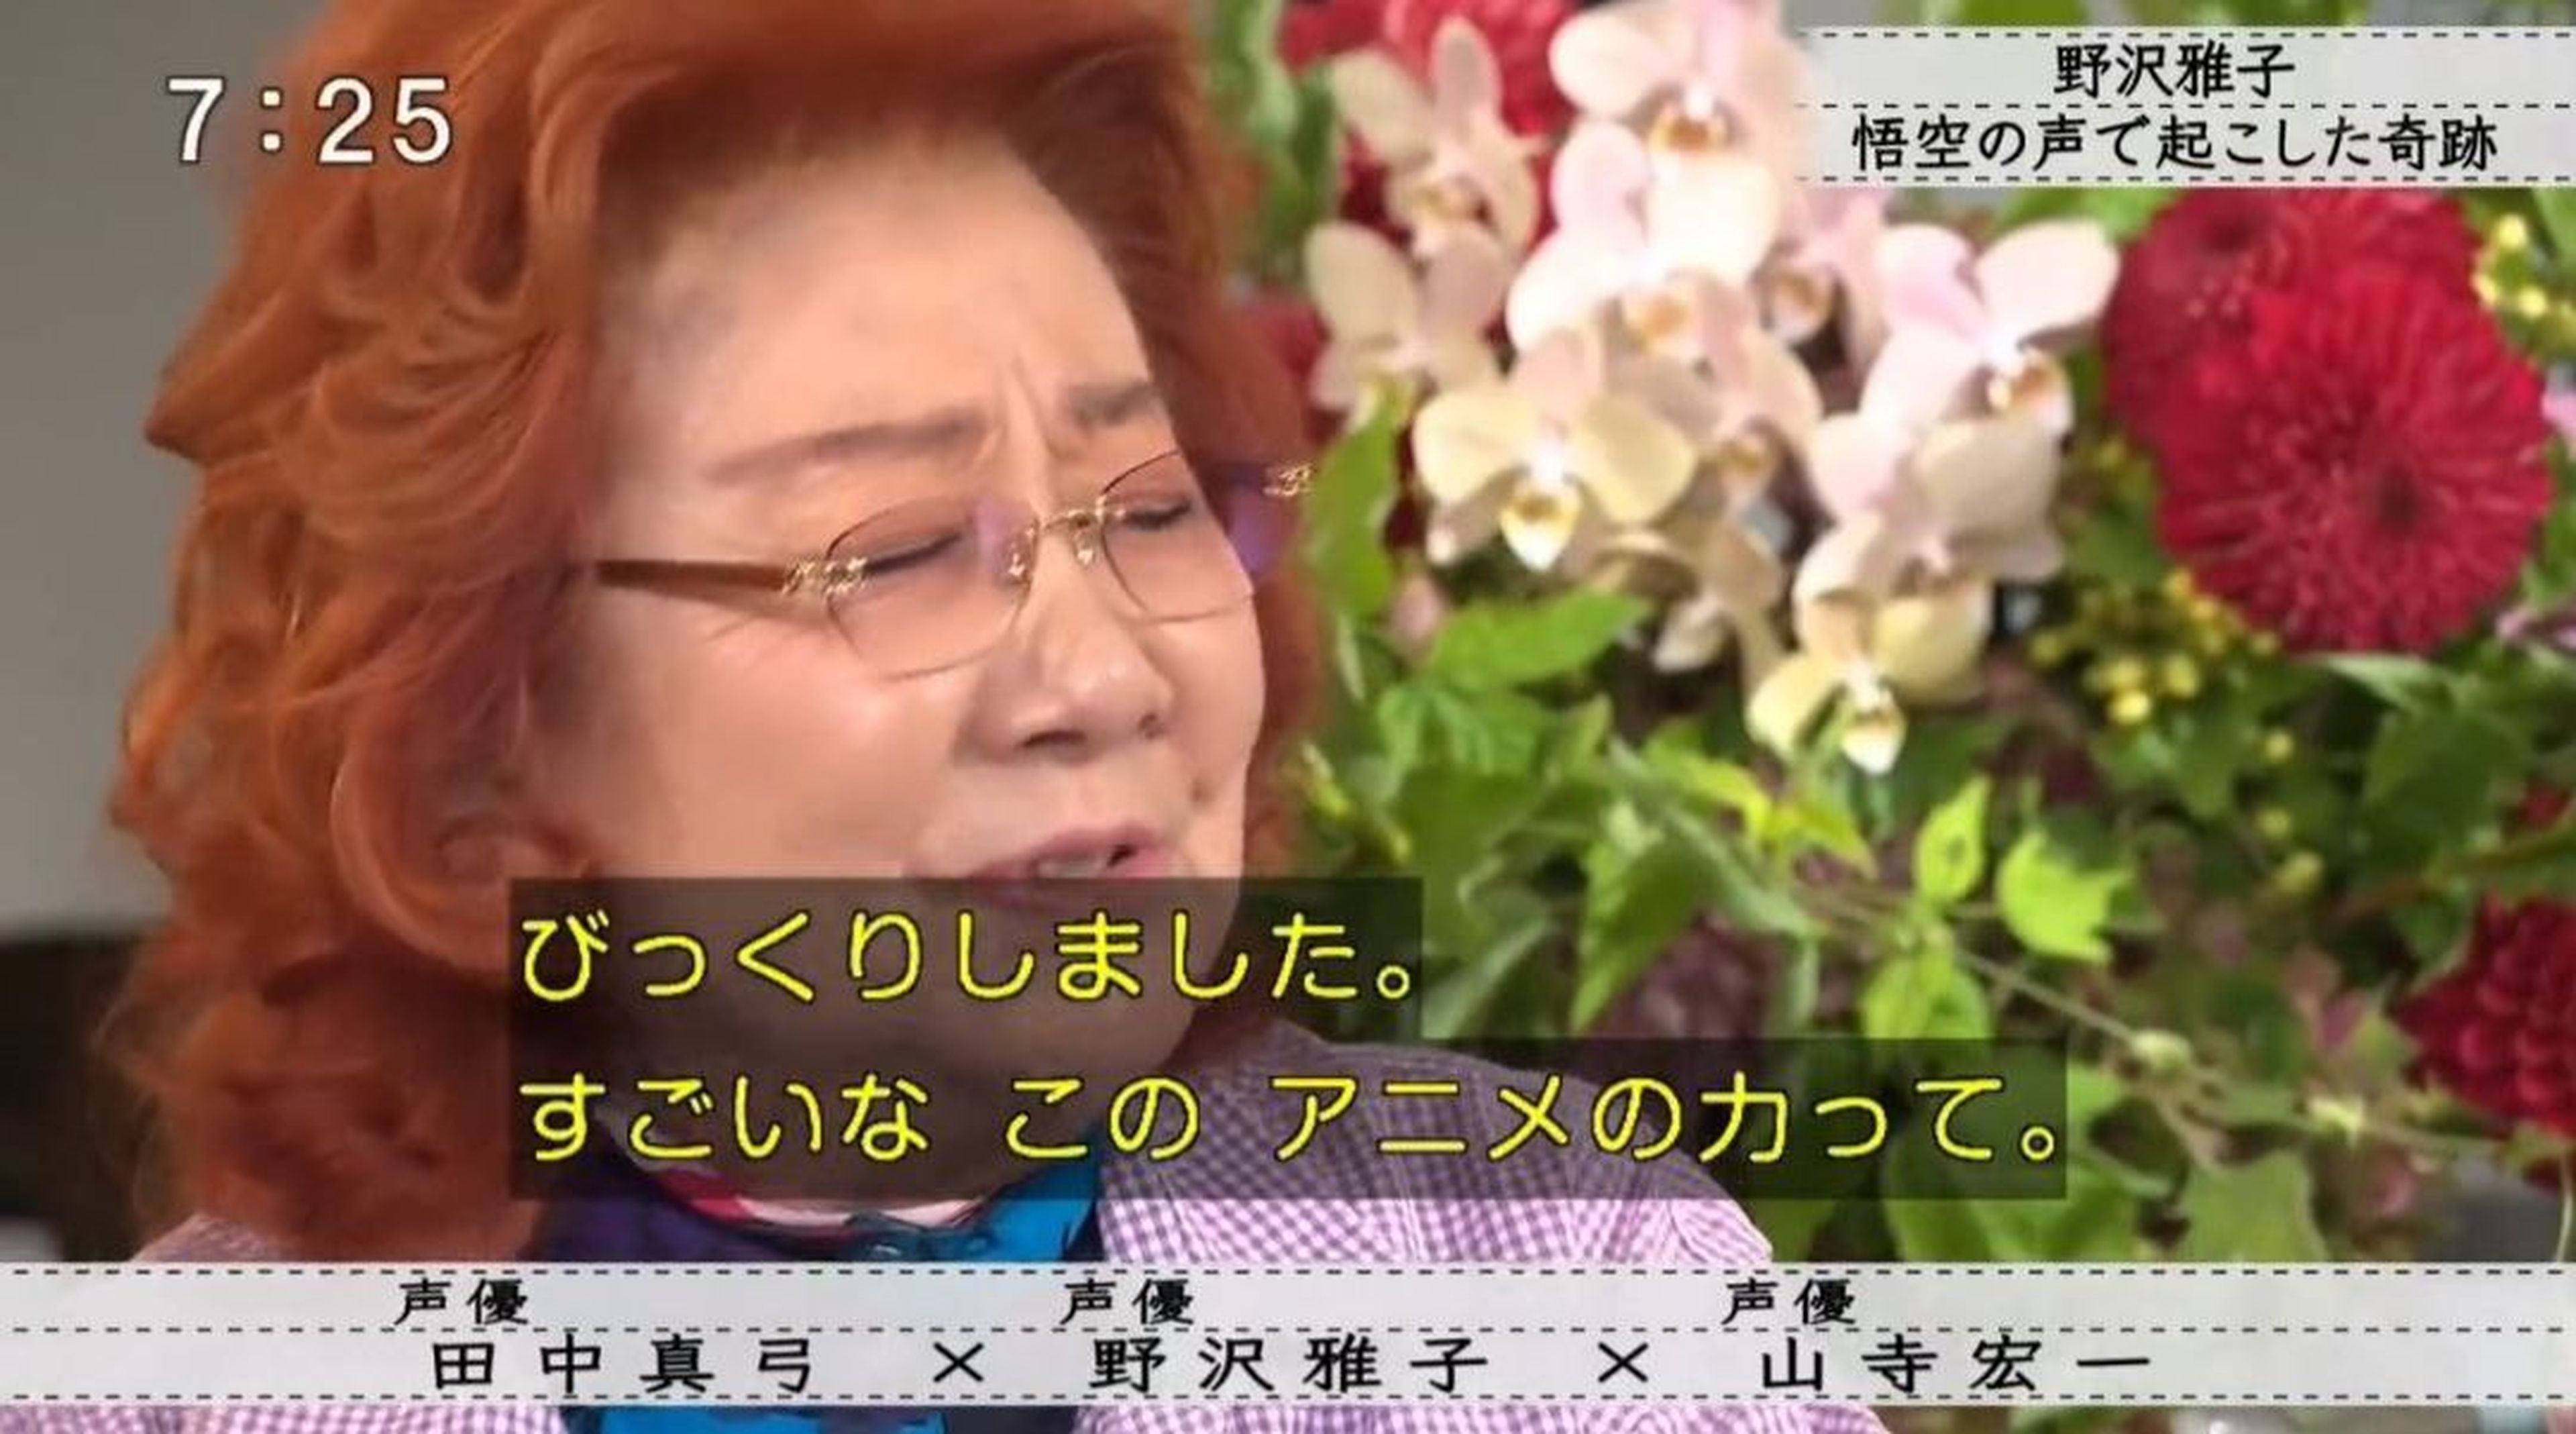 Dragon Ball - Masako Nozawa, la voz de Goku en japonés, hizo feliz a un niño antes de morir